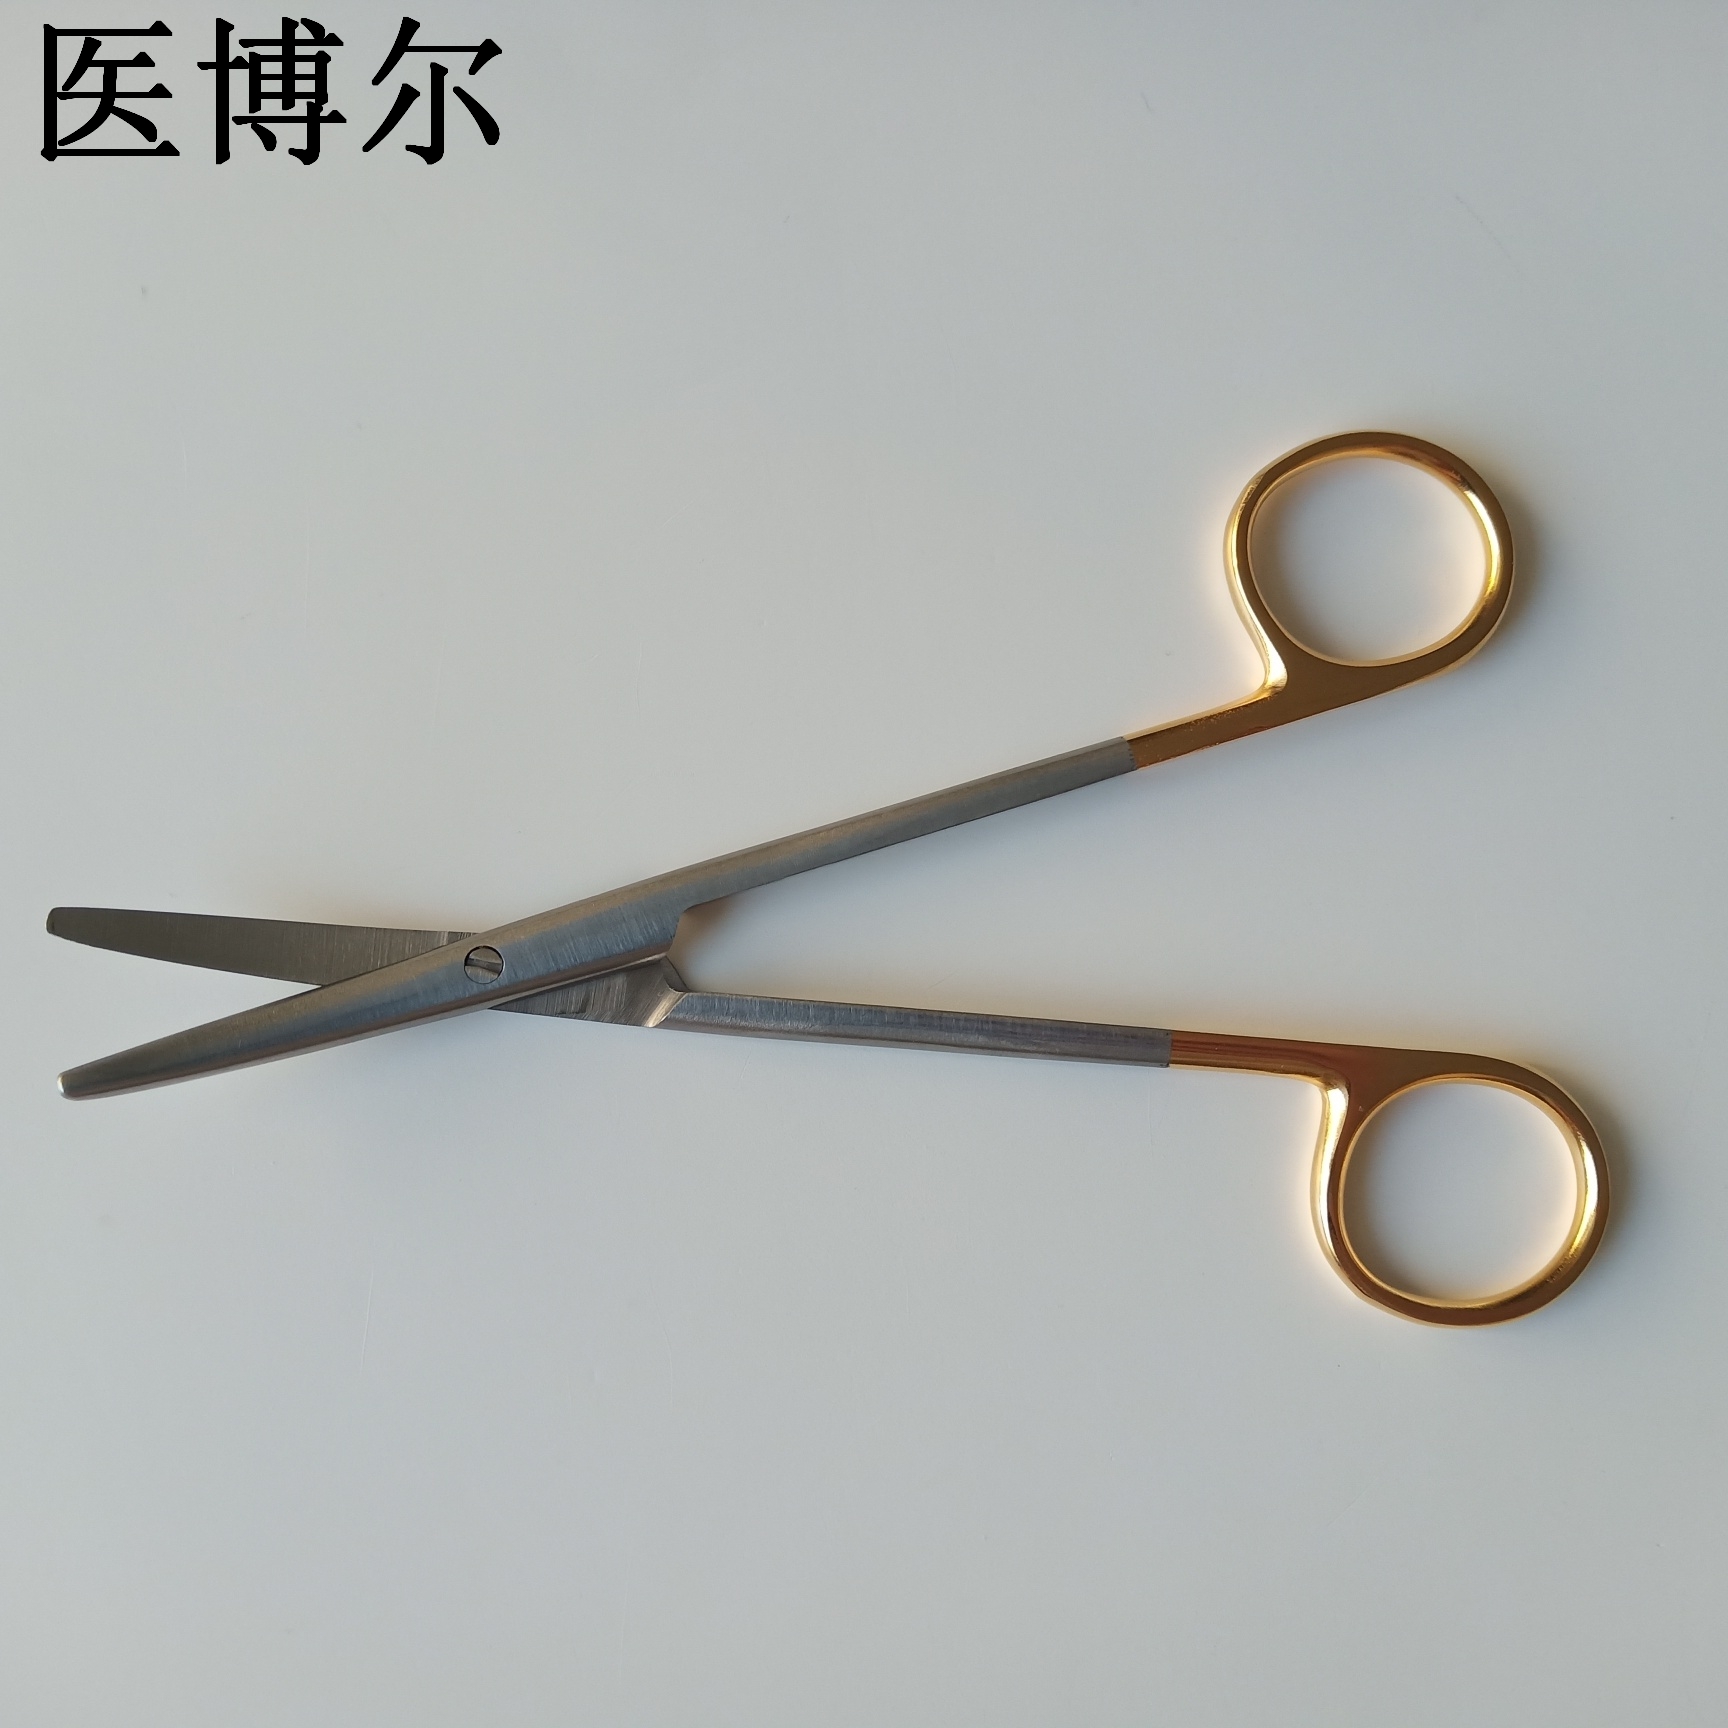 14cm精细弯圆金柄剪刀 (4).jpg